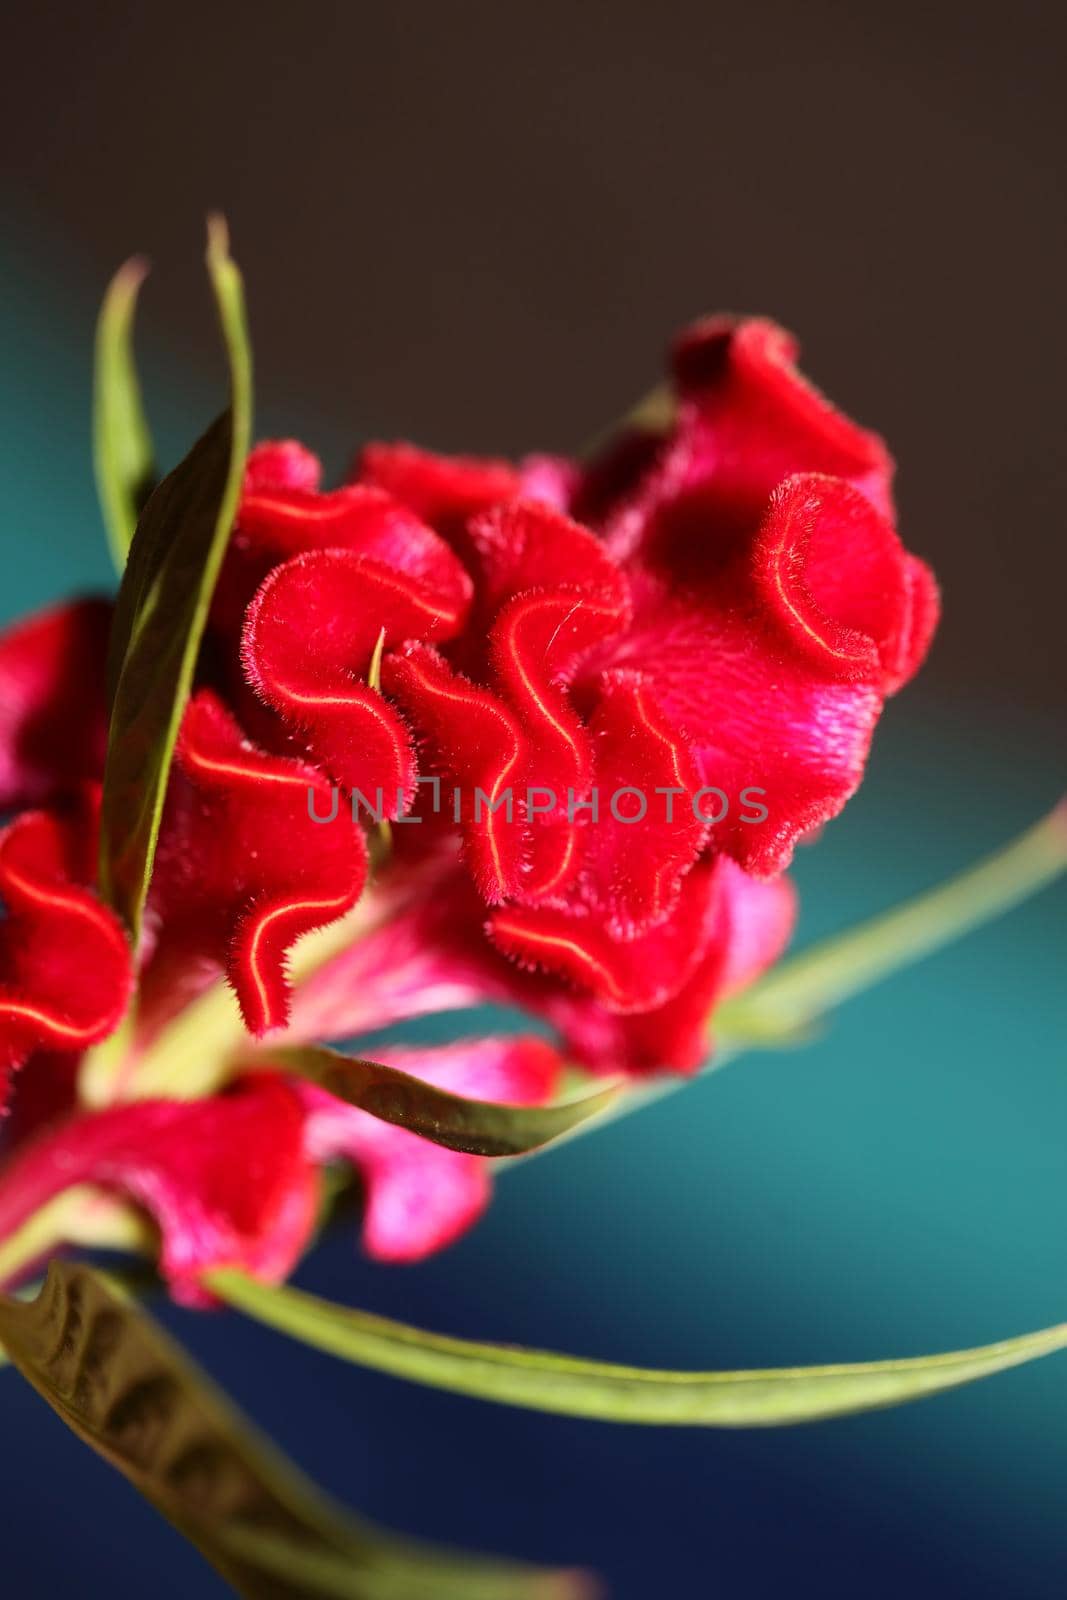 Red flower blossom close up celosia argentea family amaranthaceae botanical background high quality big size prints